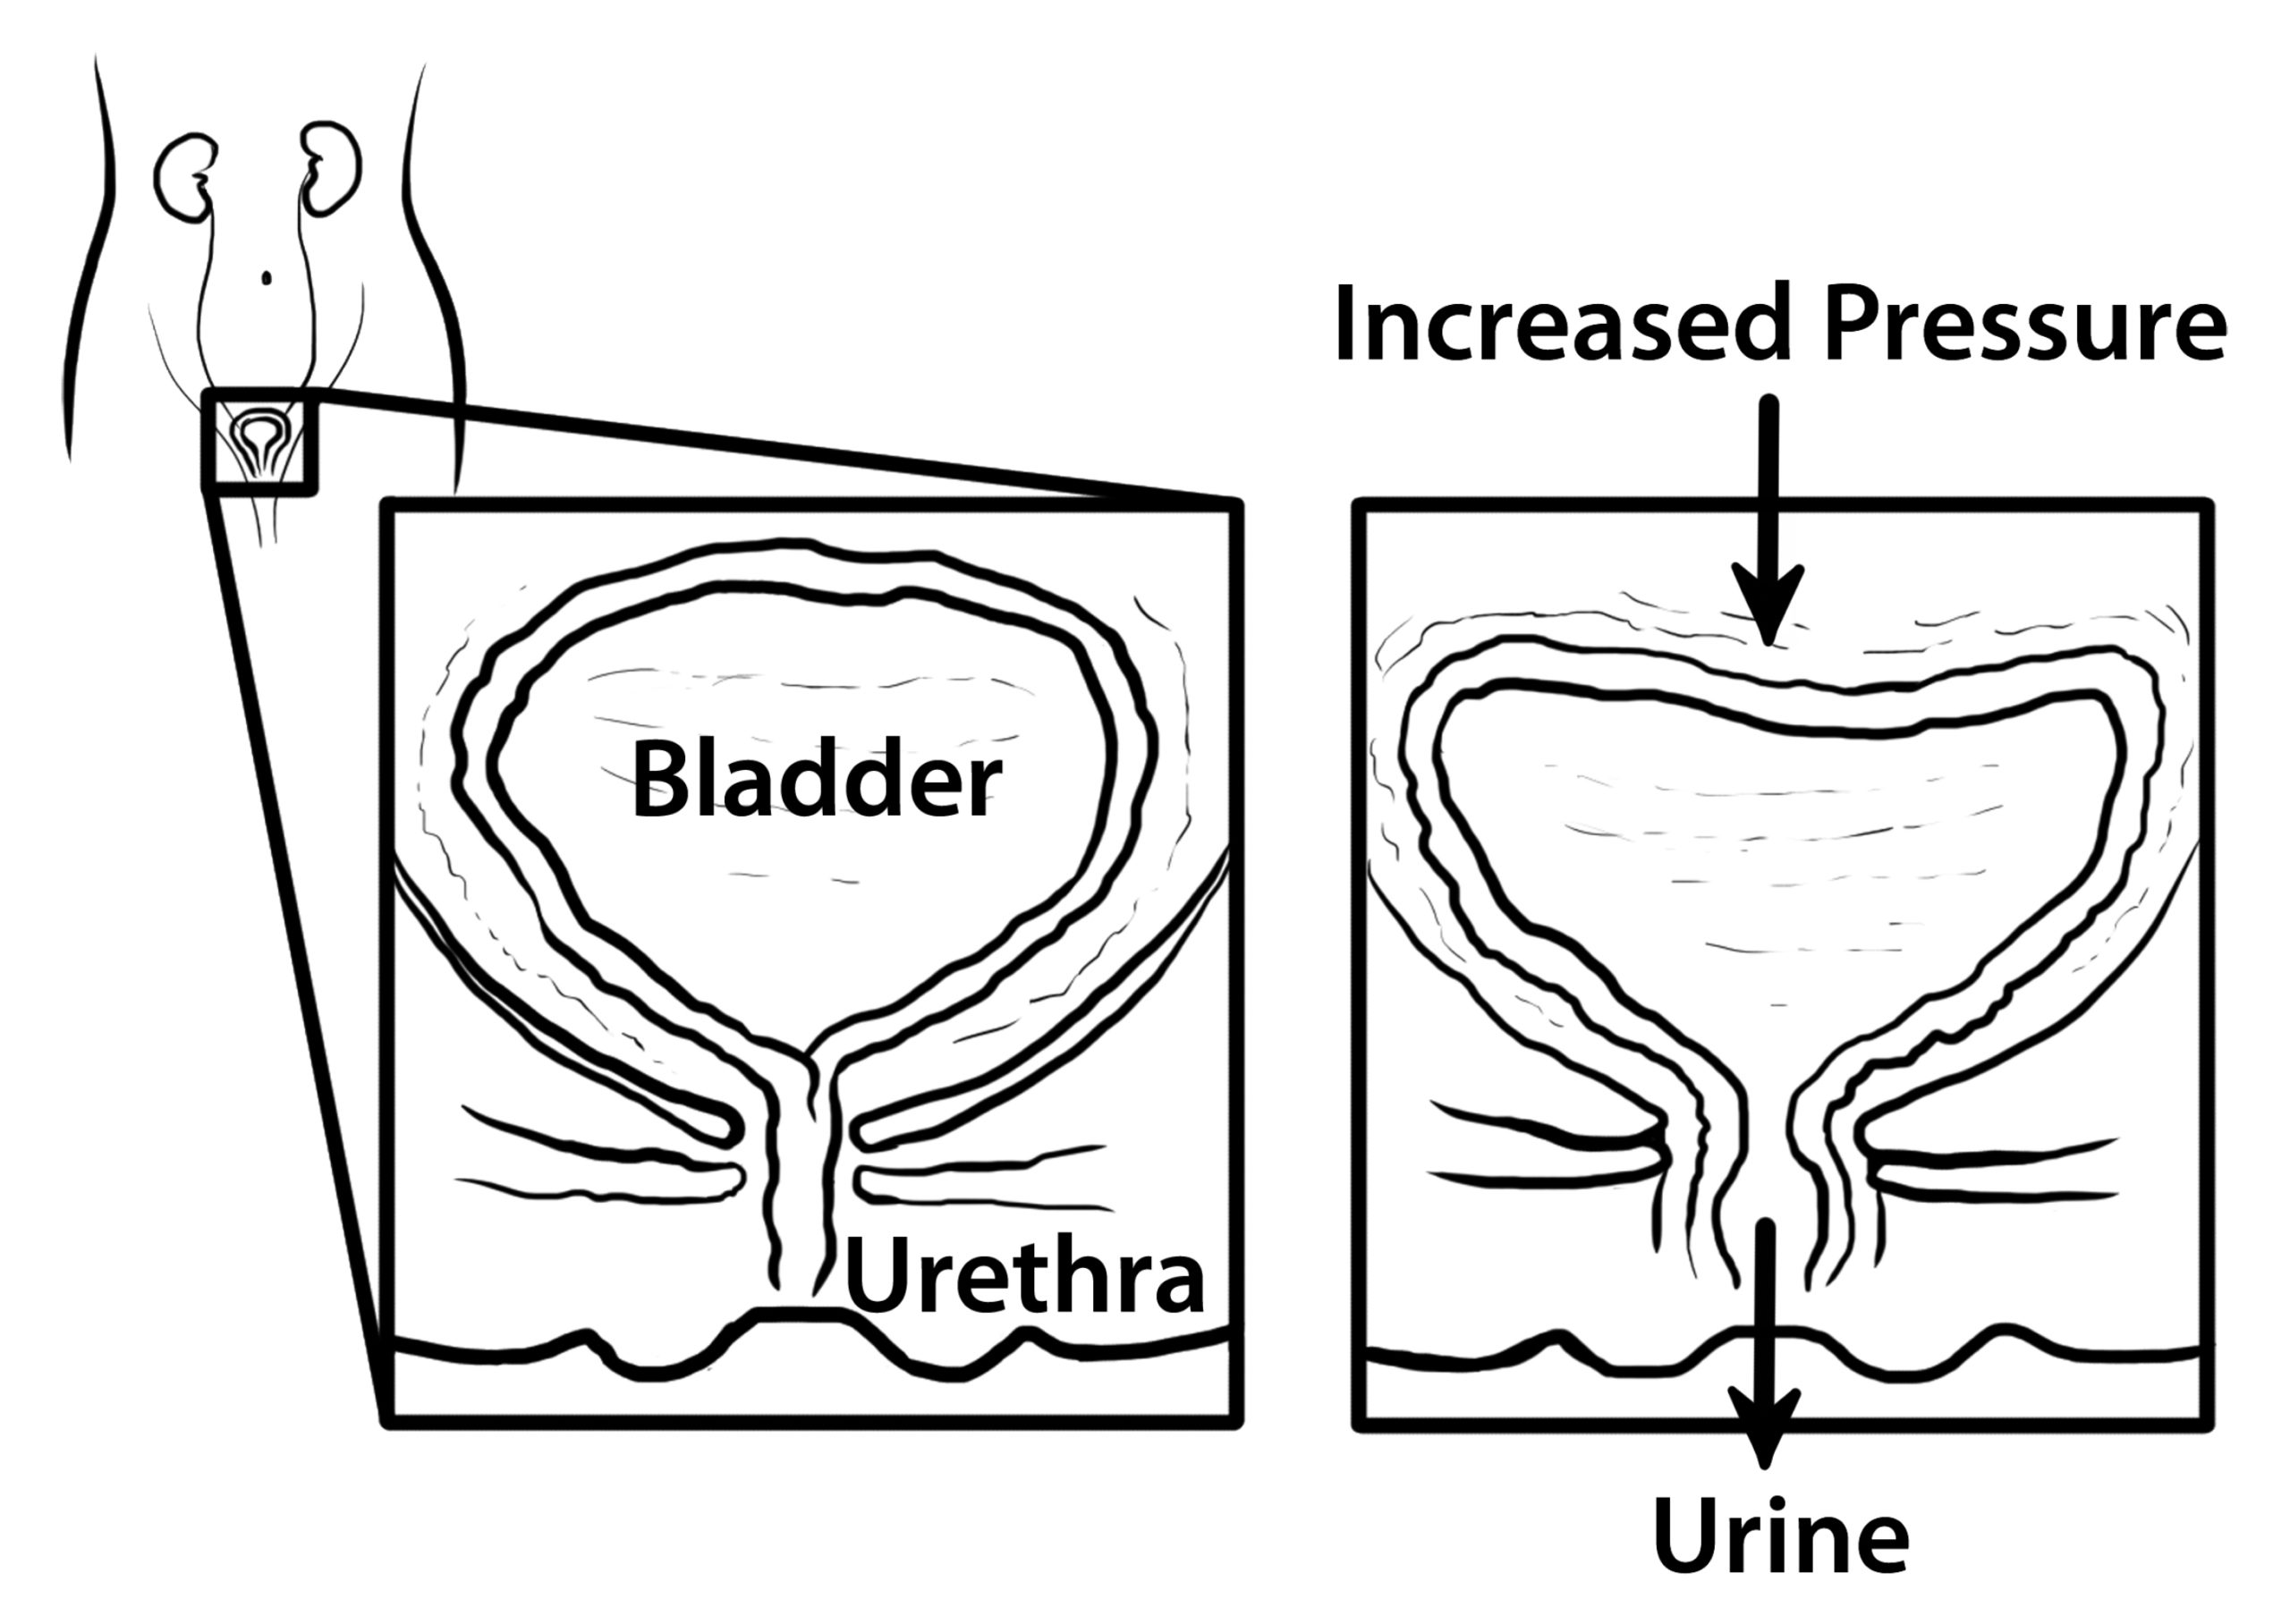 Image showing a normal bladder and pressure increased bladder for bladder cancer incontinence.